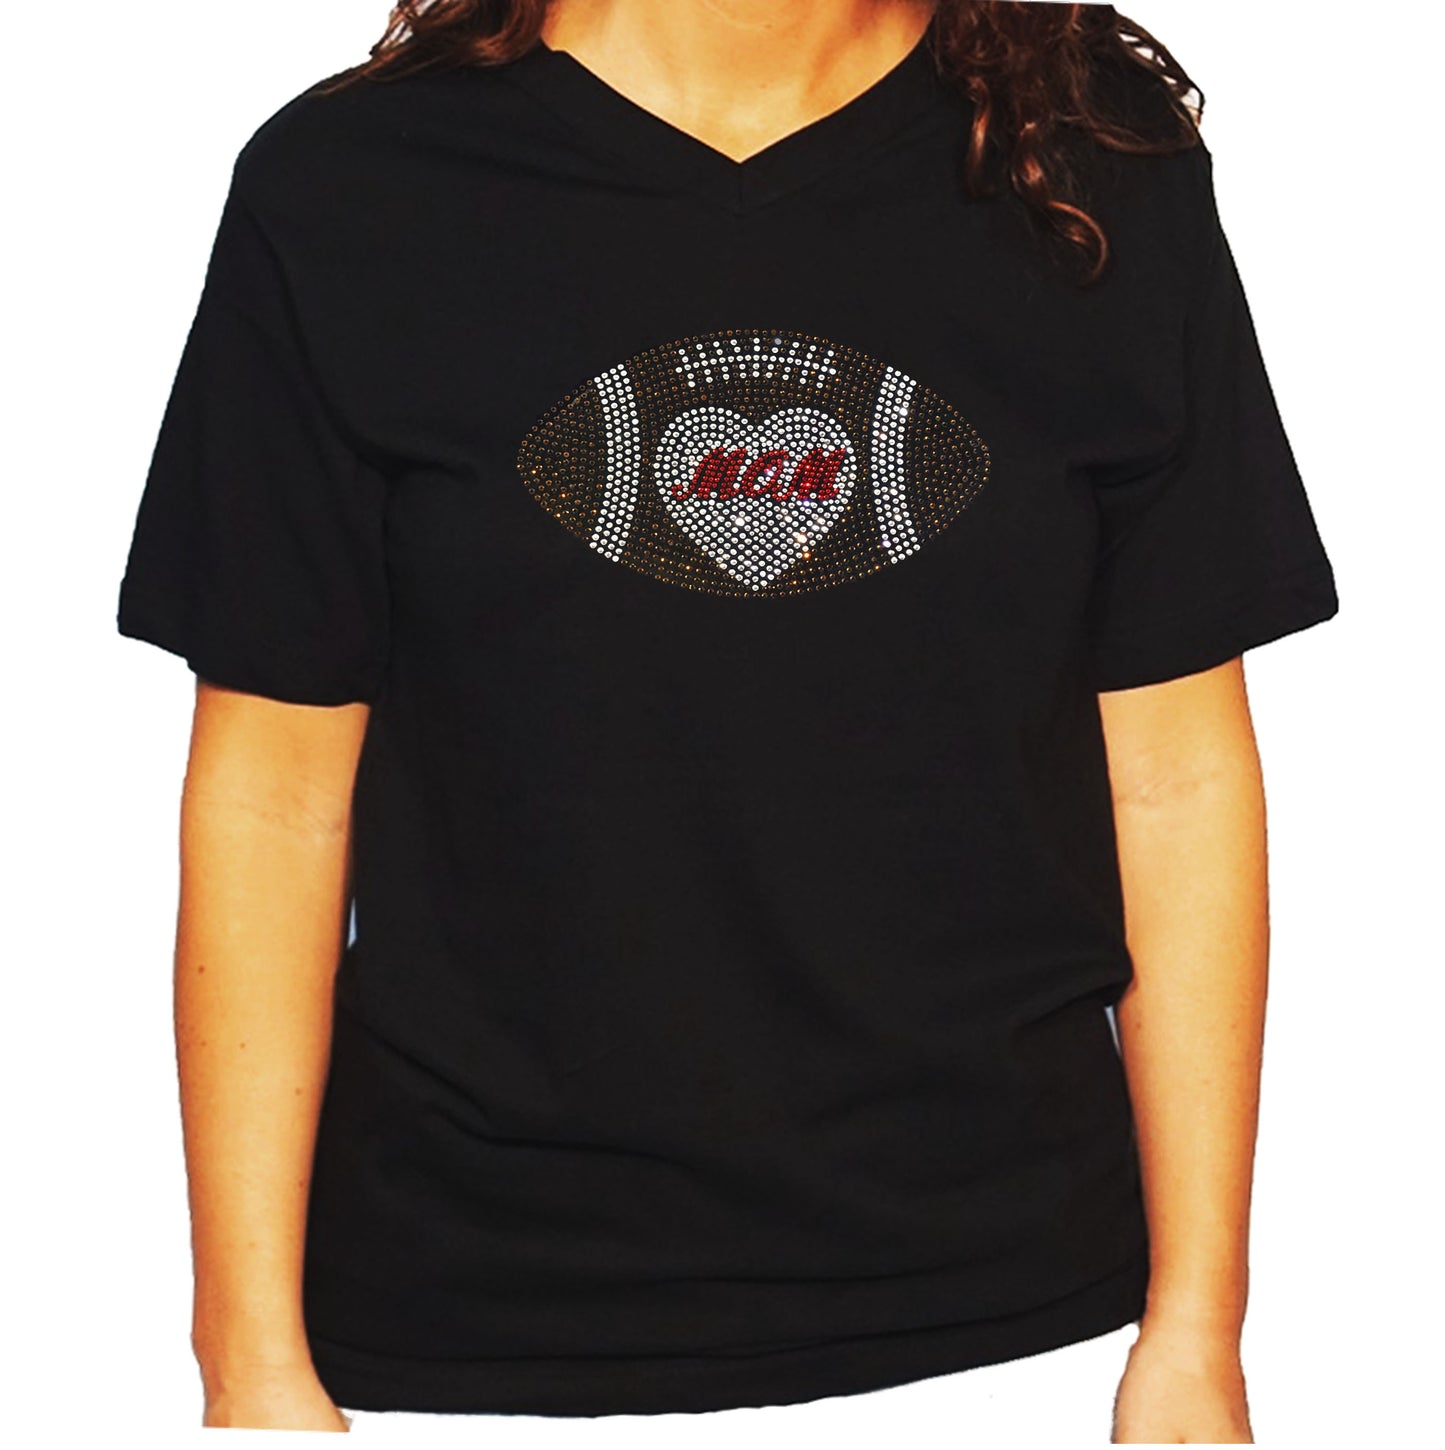 Women's / Unisex T-Shirt with Football Mom Heart  in Rhinestones